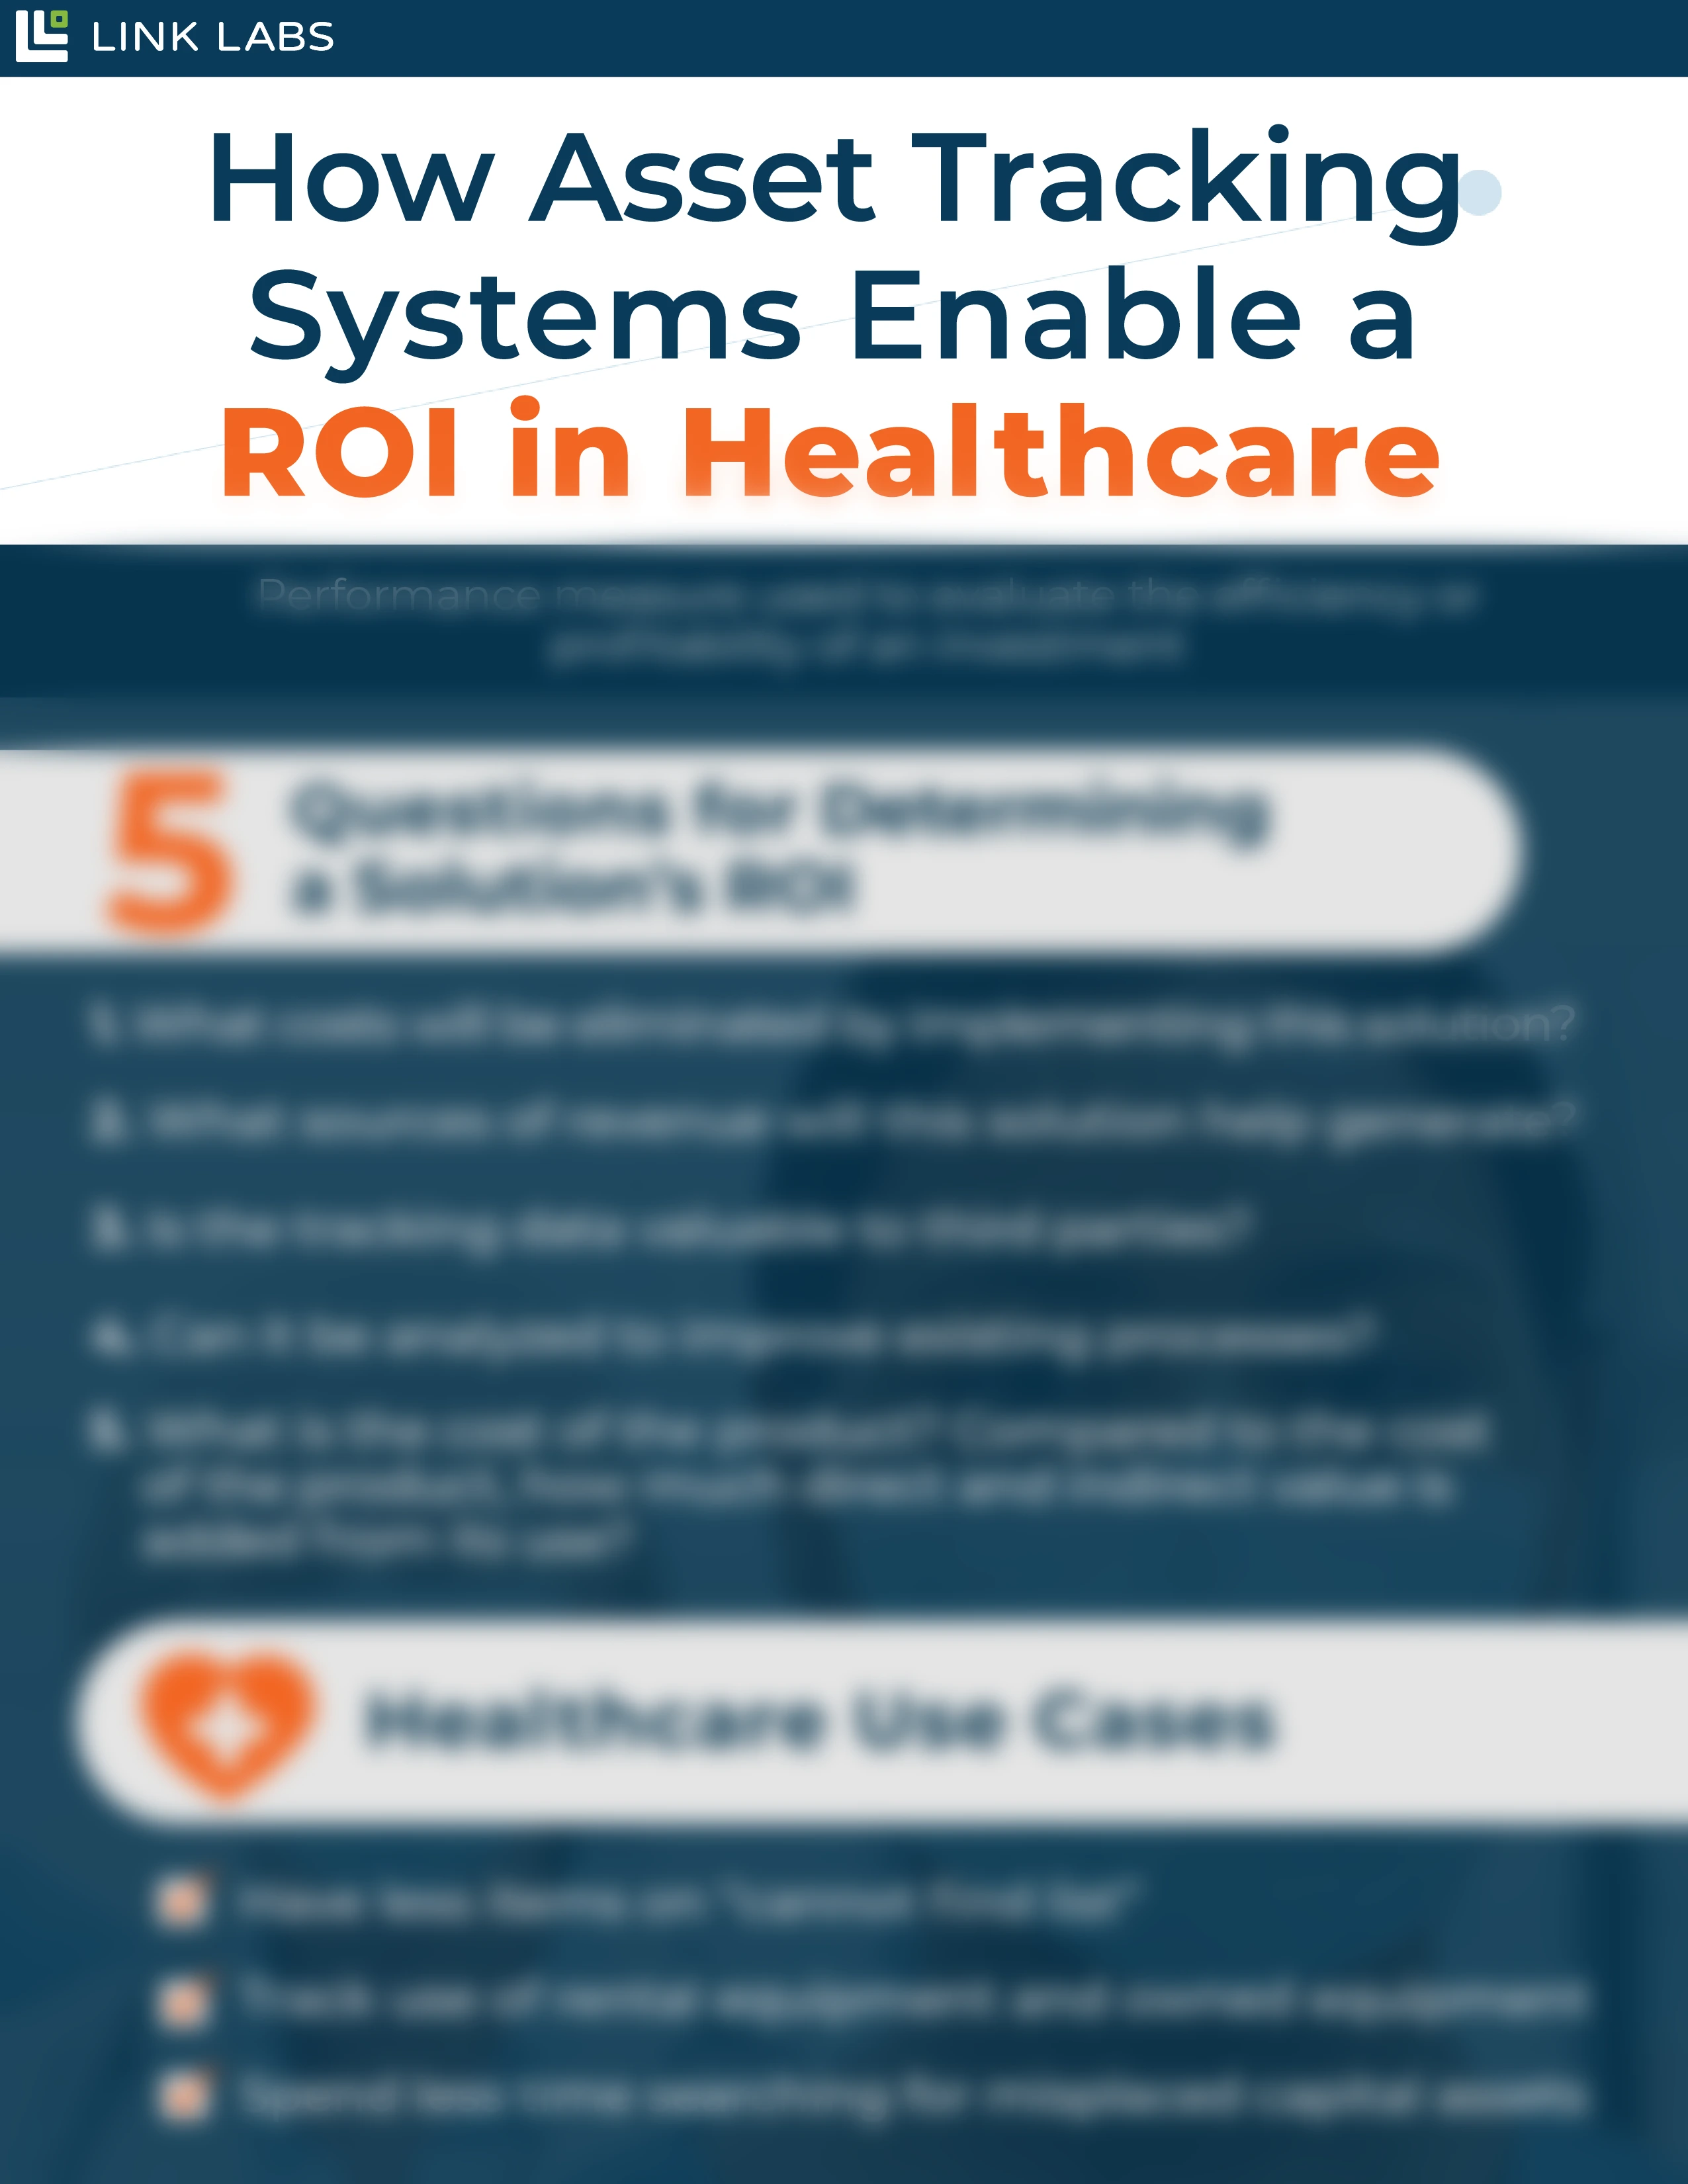 Healthcare-ROI-Infographic-blurred